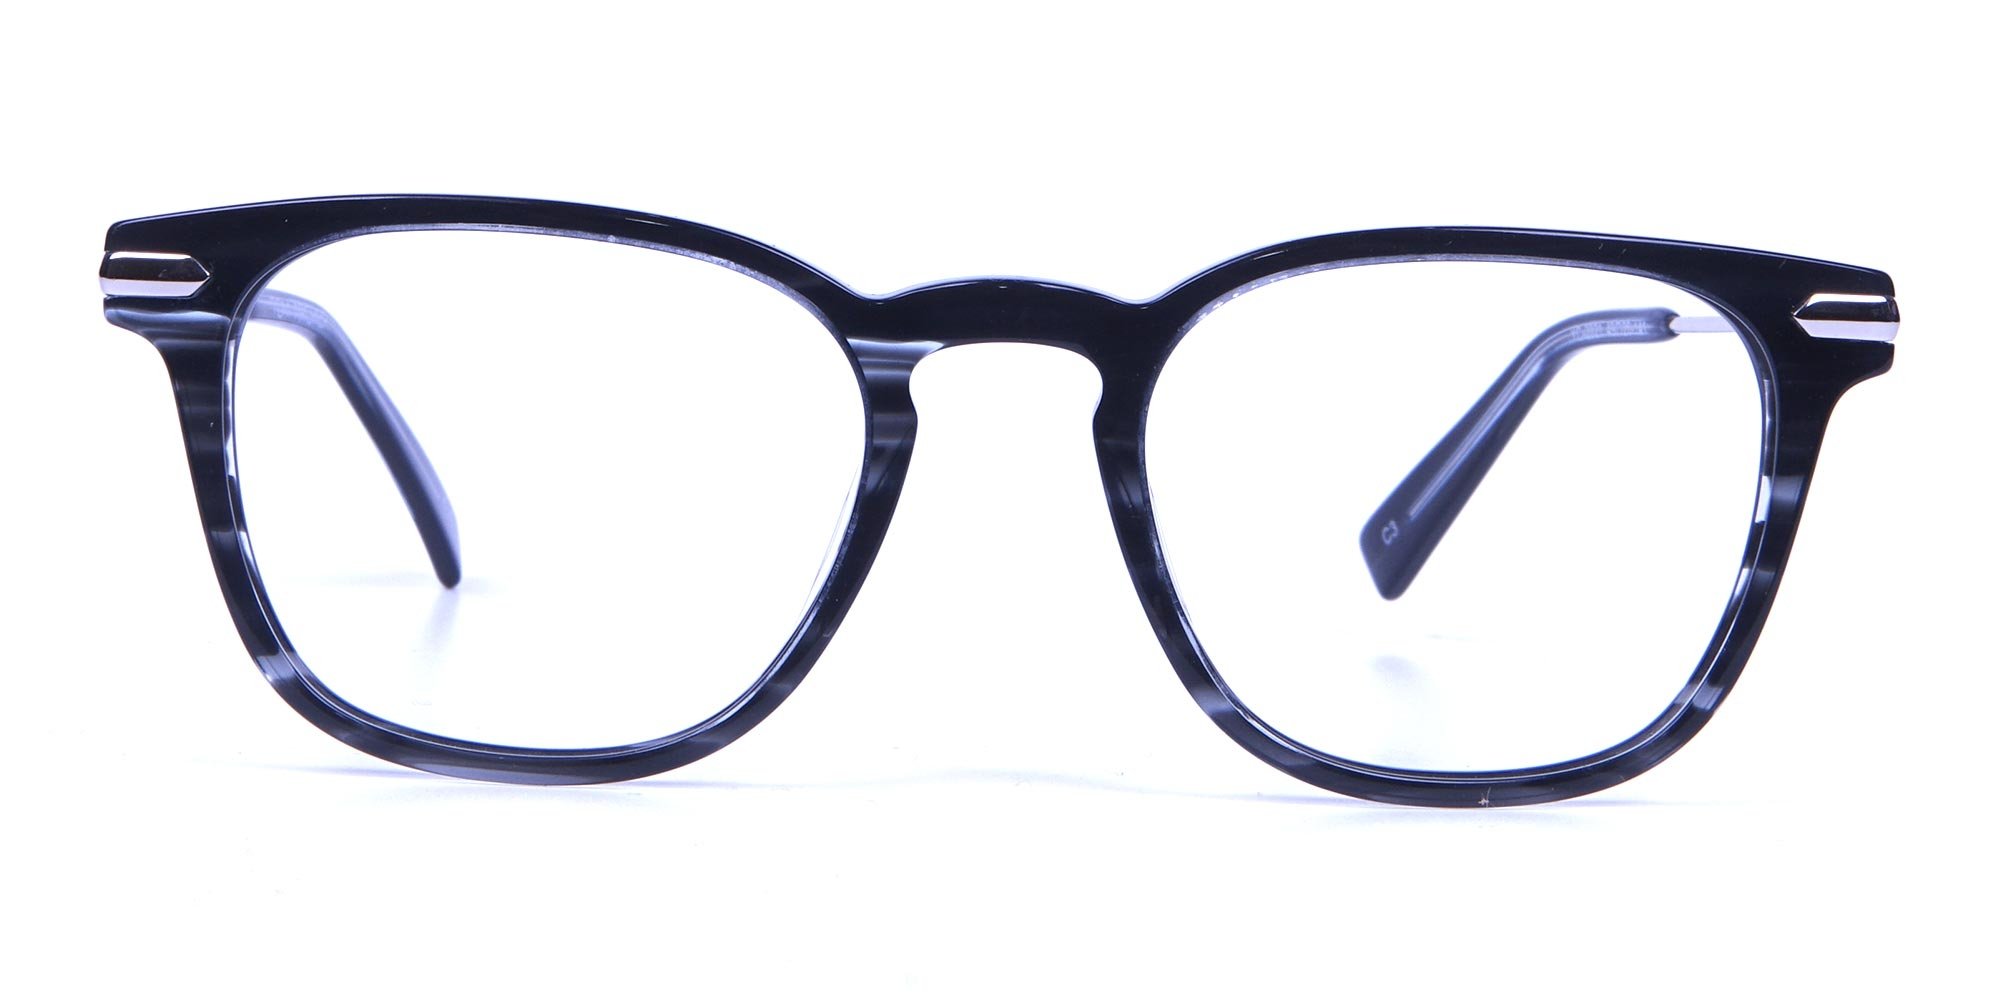 Black and White Striped Glasses